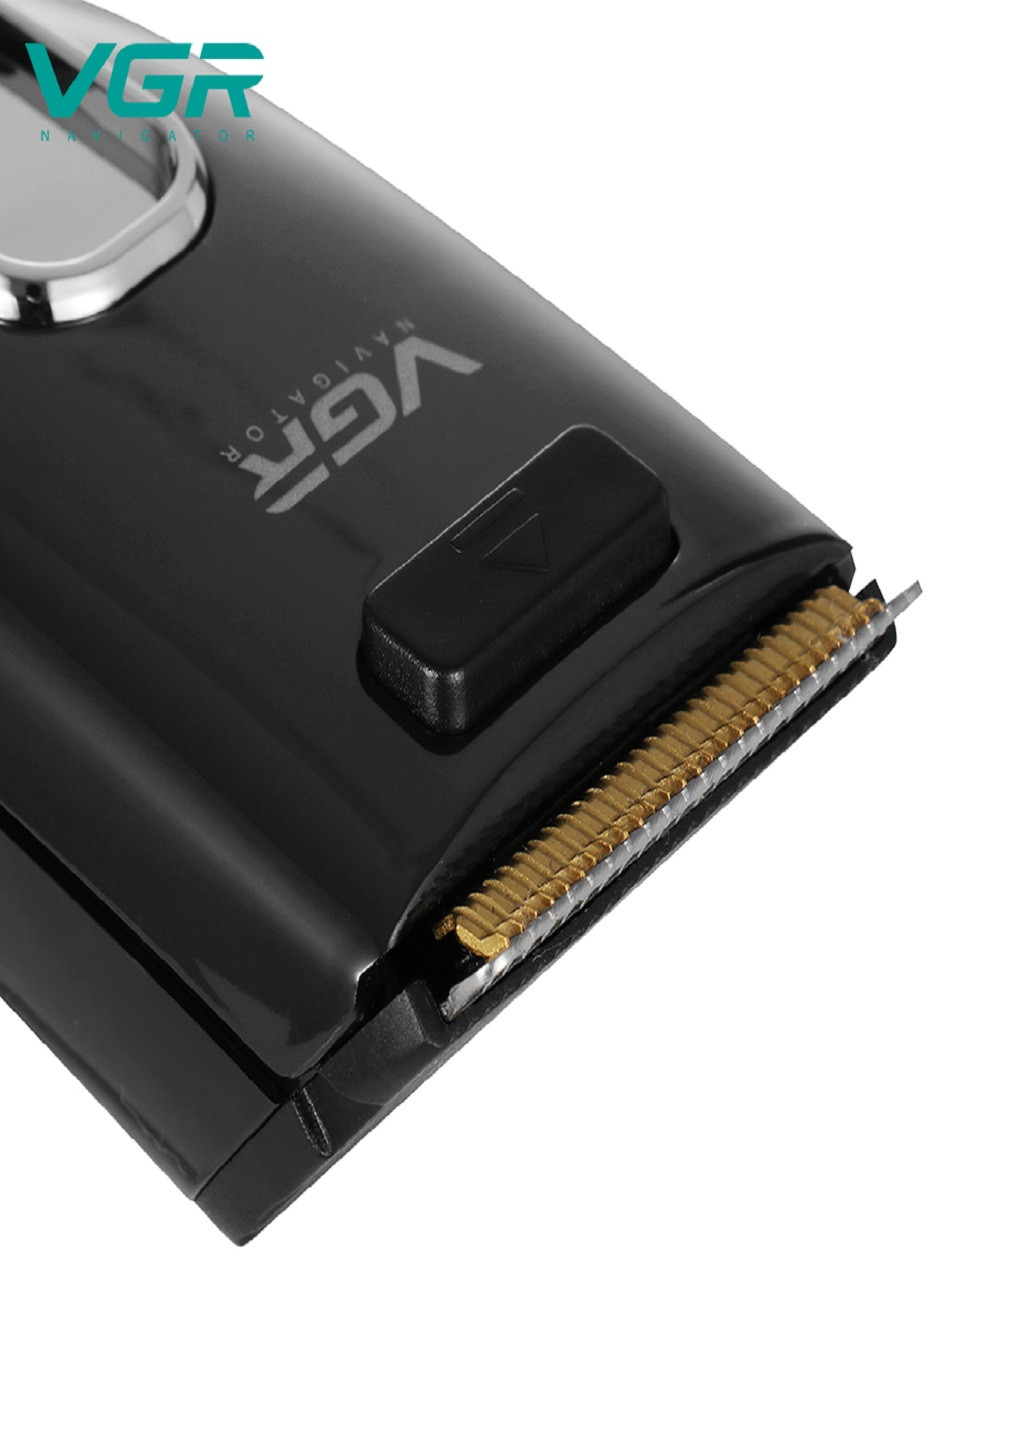 Акумуляторна машинка для стрижки волосся з насадками 040 VGR (253131633)